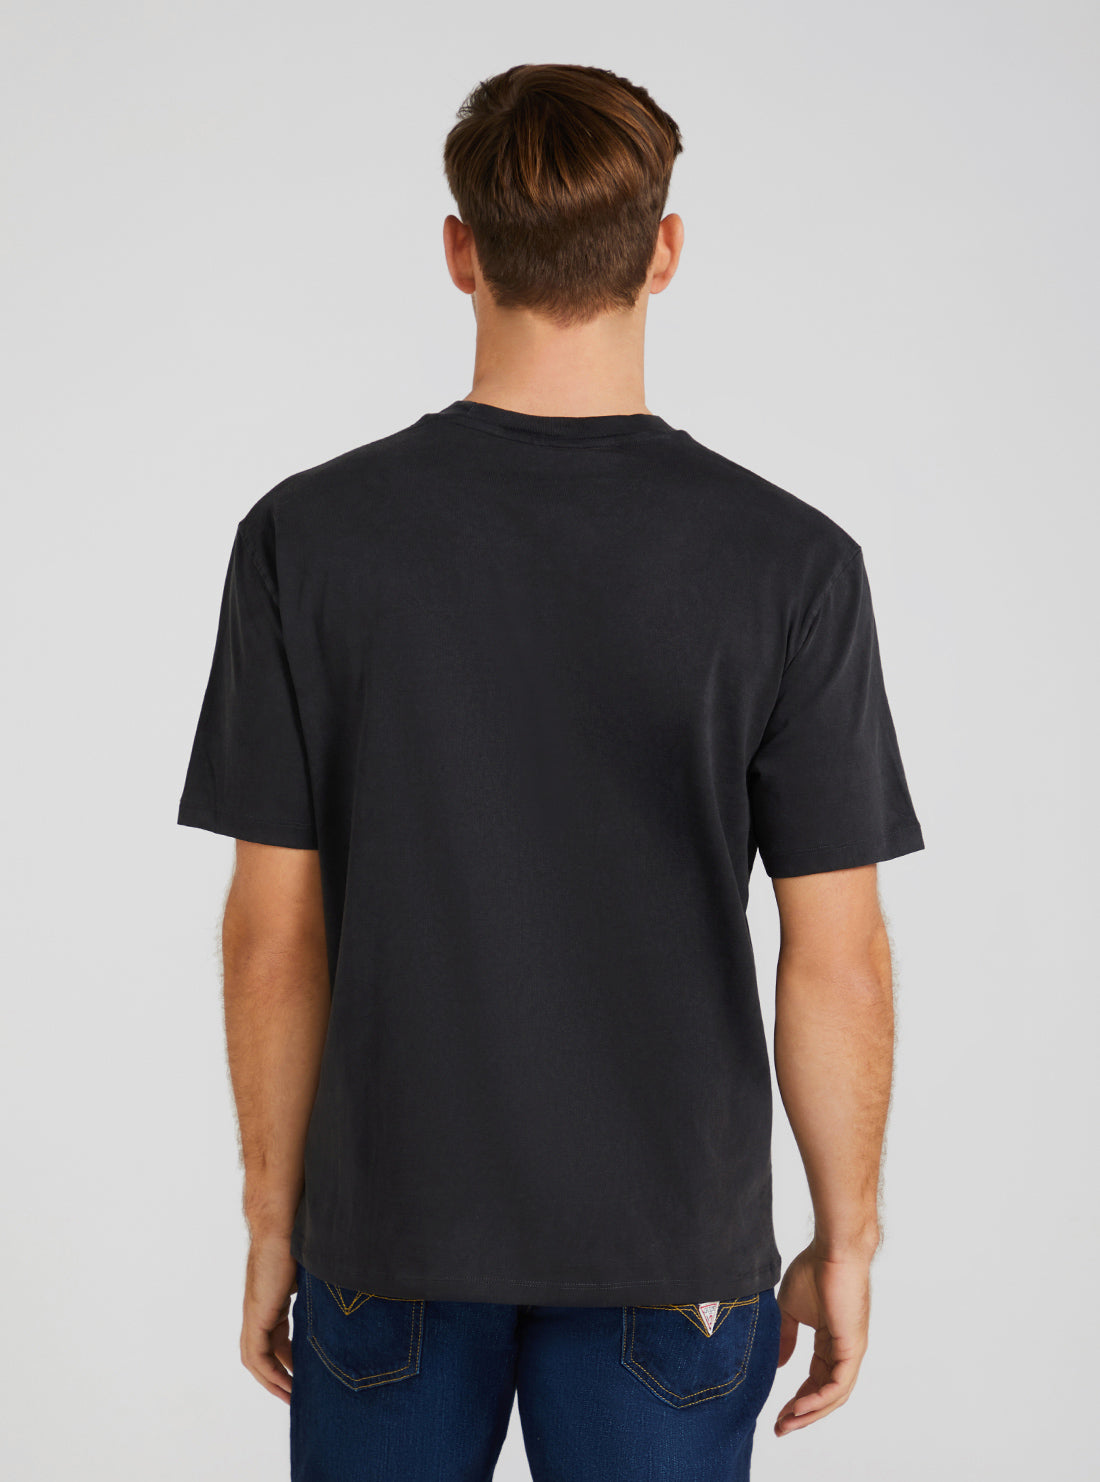 GUESS Men's Guess Originals Black Multi Yatch Logo T-Shirt M3GI08K9XF3 Back View